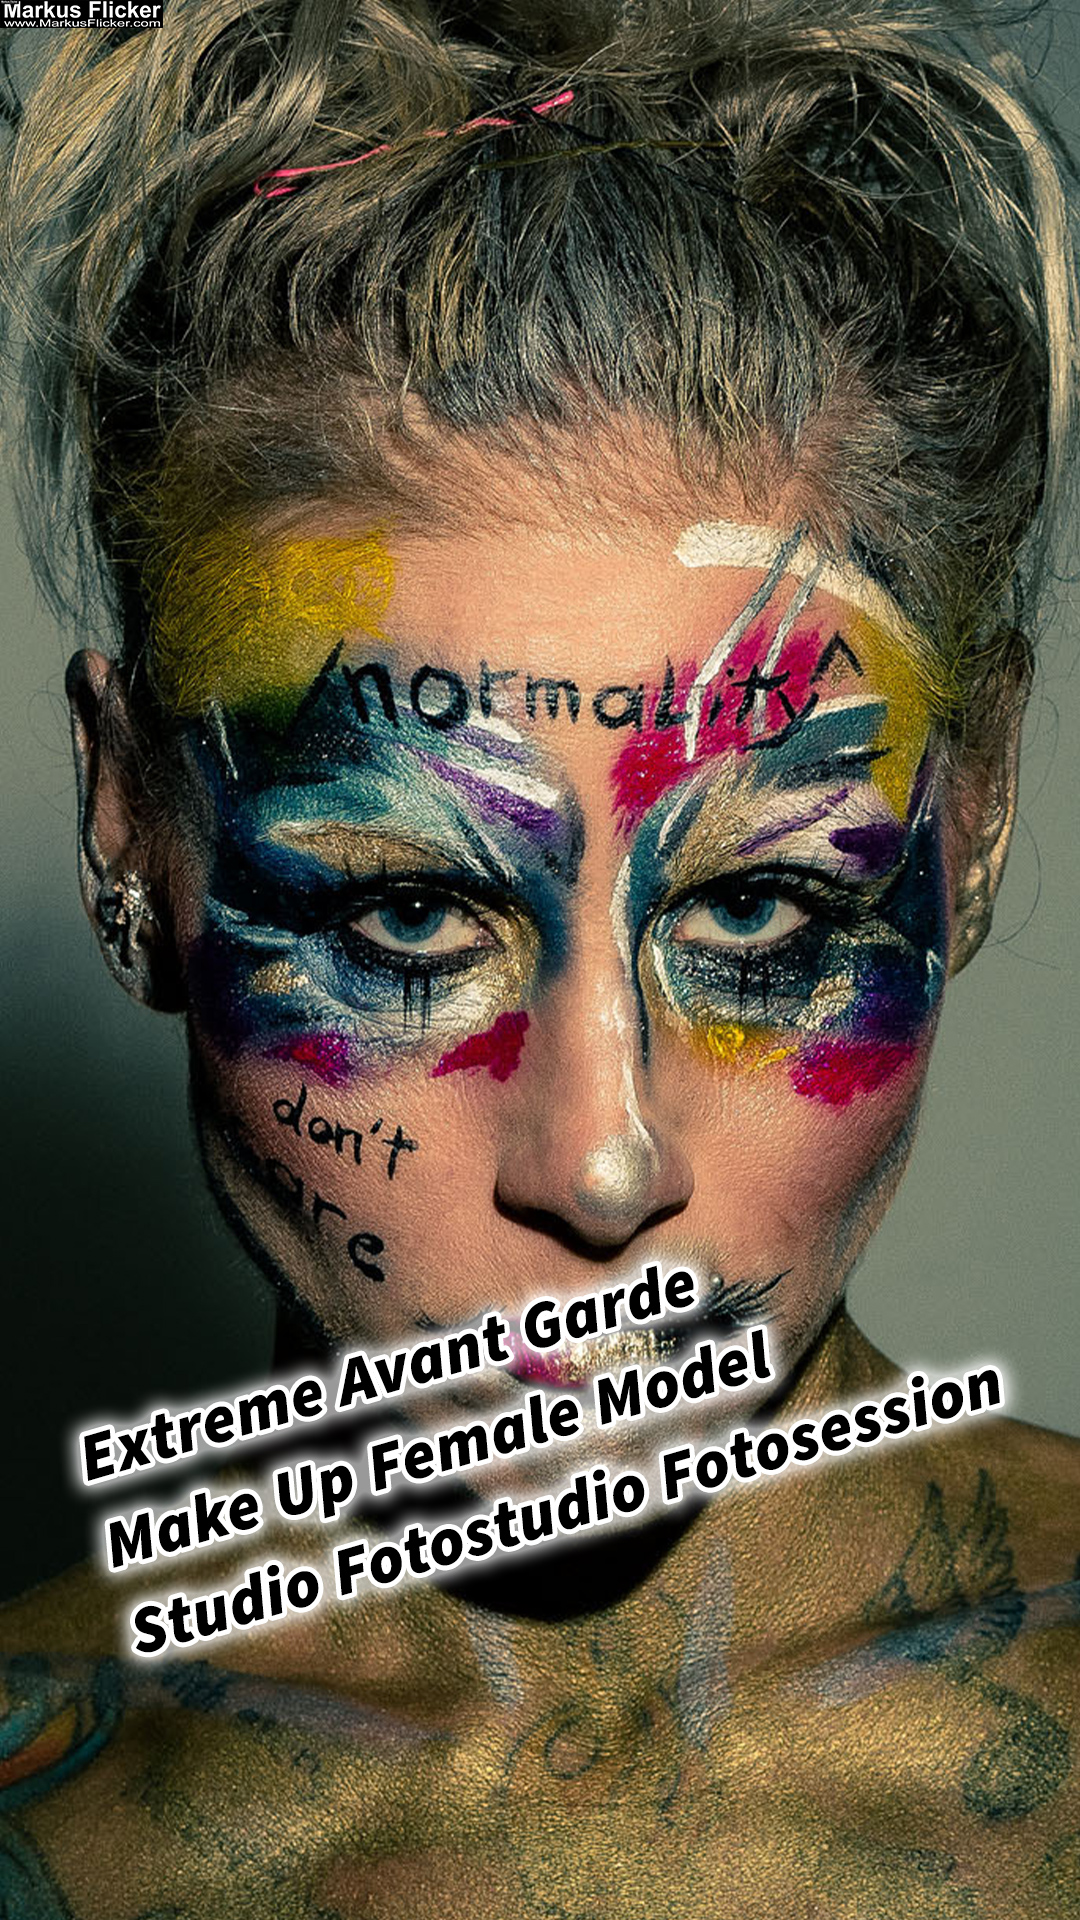 Extreme Avant Garde Make Up Female Model Studio Fotostudio Fotosession